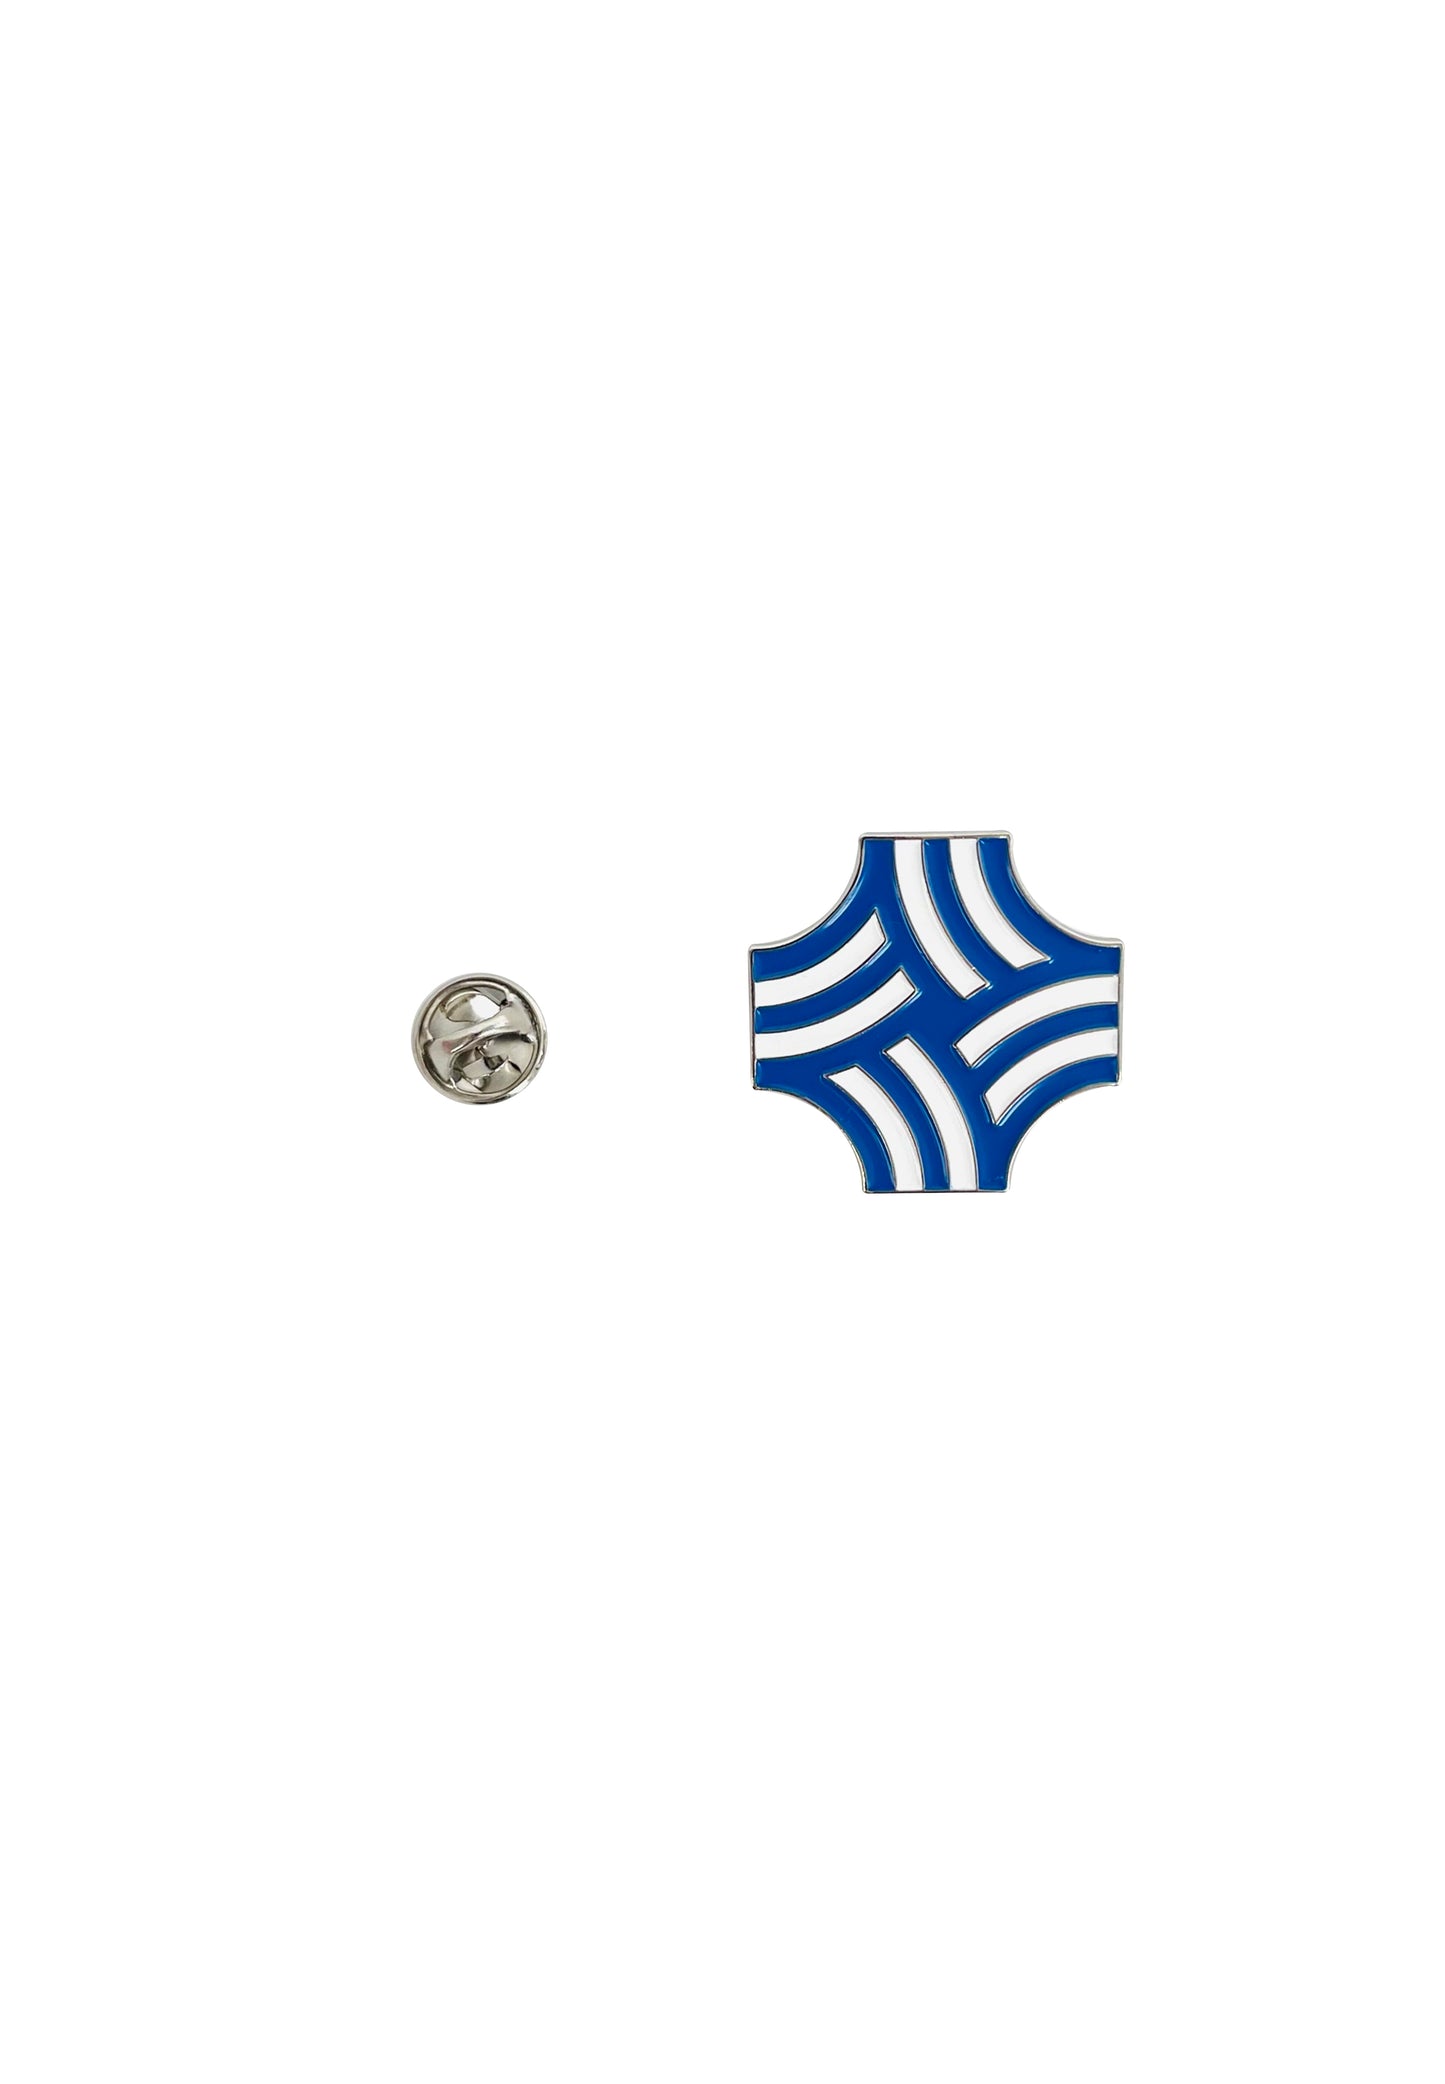 Khalifa University Logo Pin